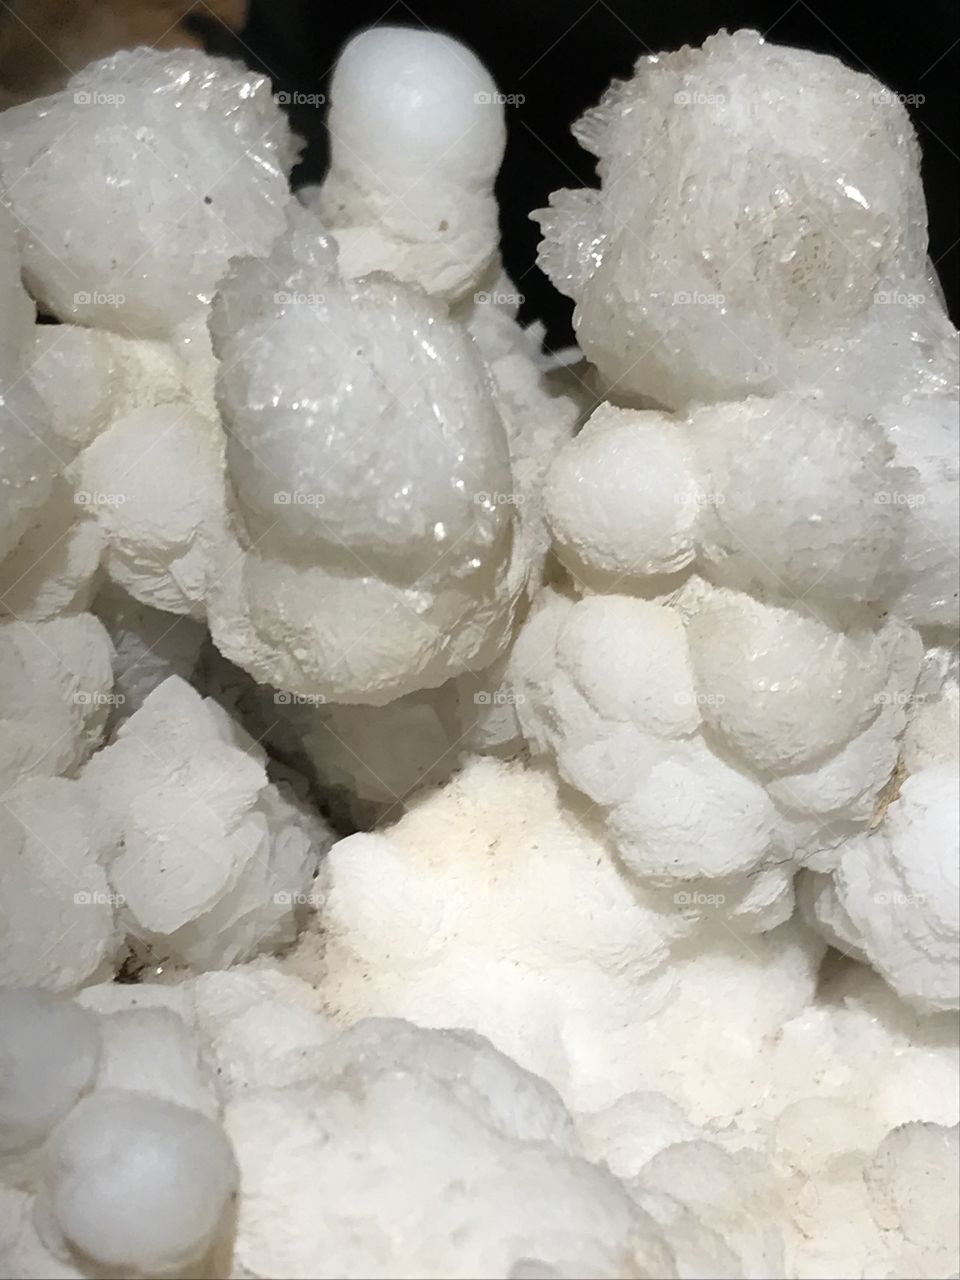 Mineral specimen